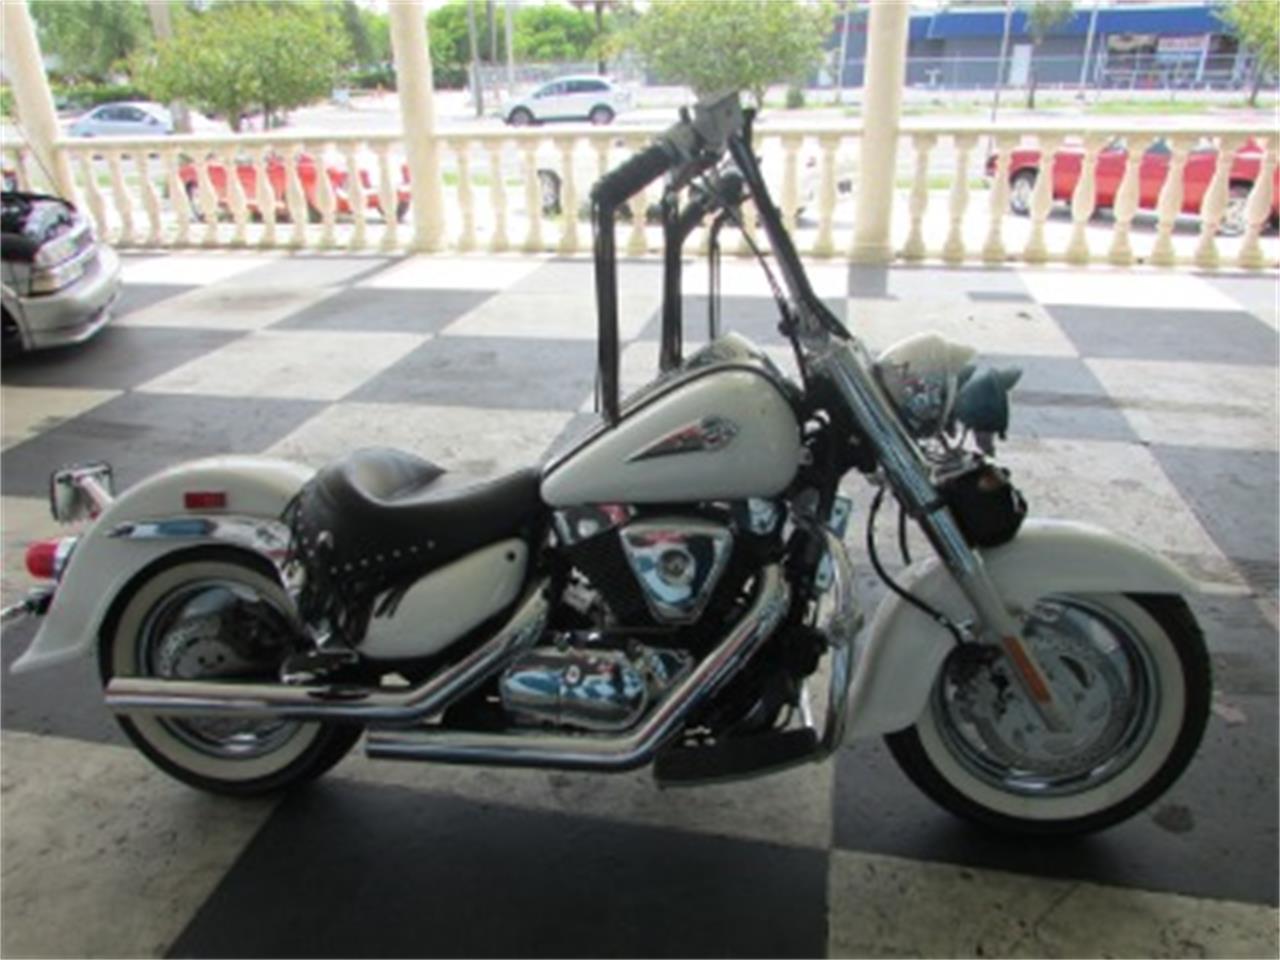 2003 Suzuki Motorcycle for sale in Miami, FL